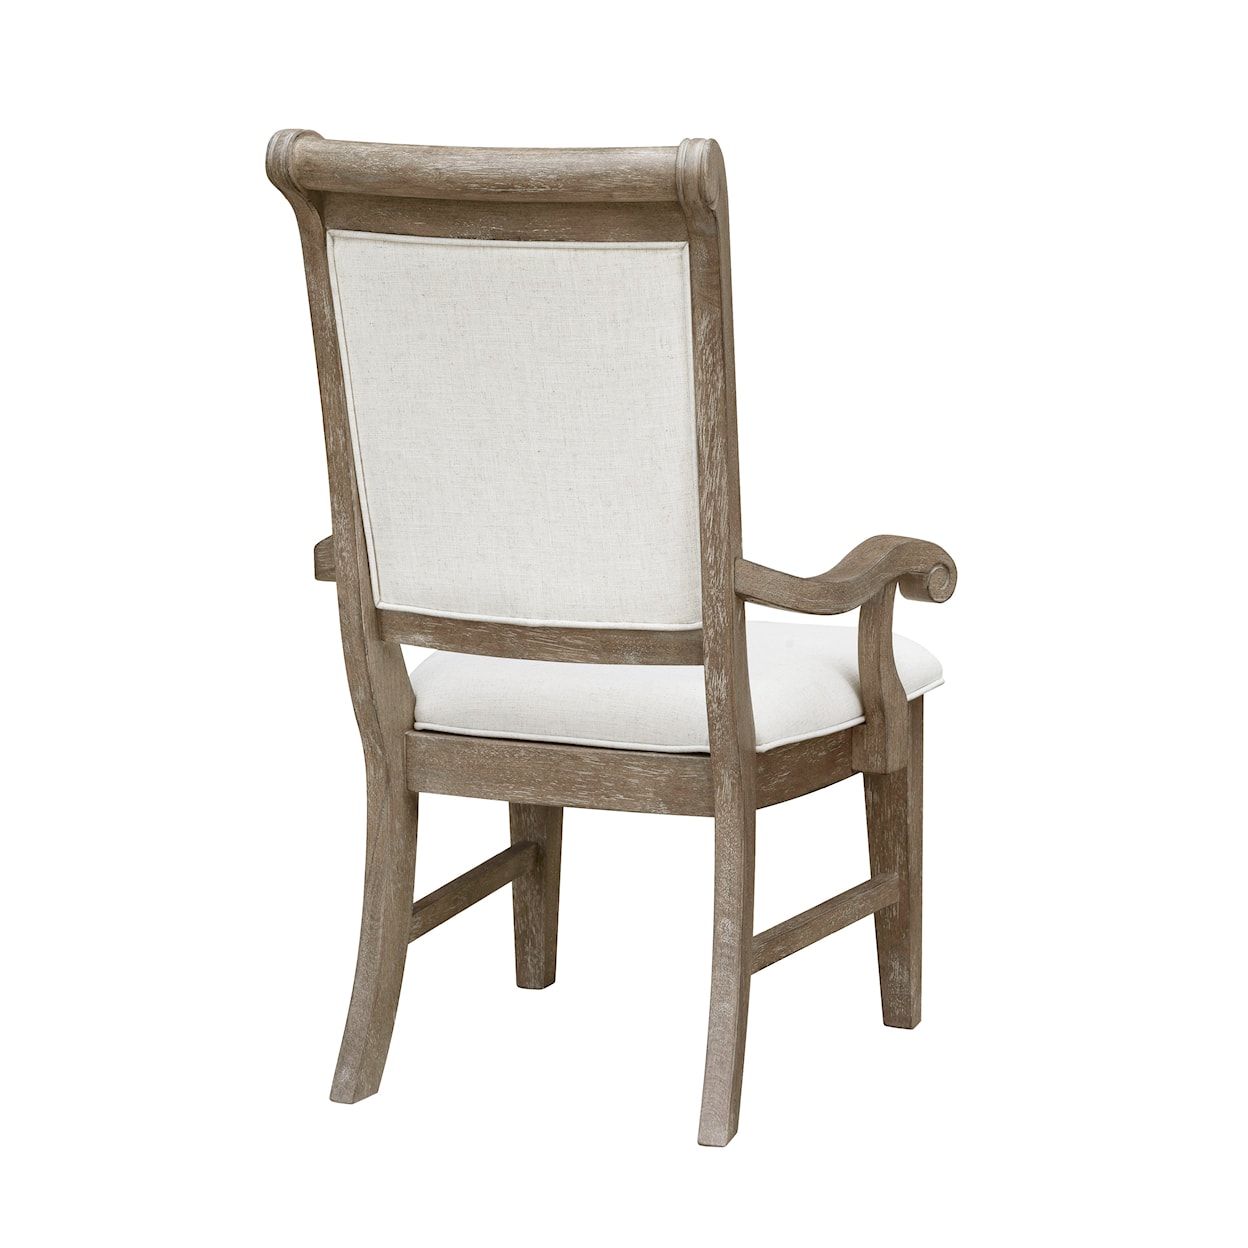 Samuel Lawrence Lawson's Creek Dining Arm Chair